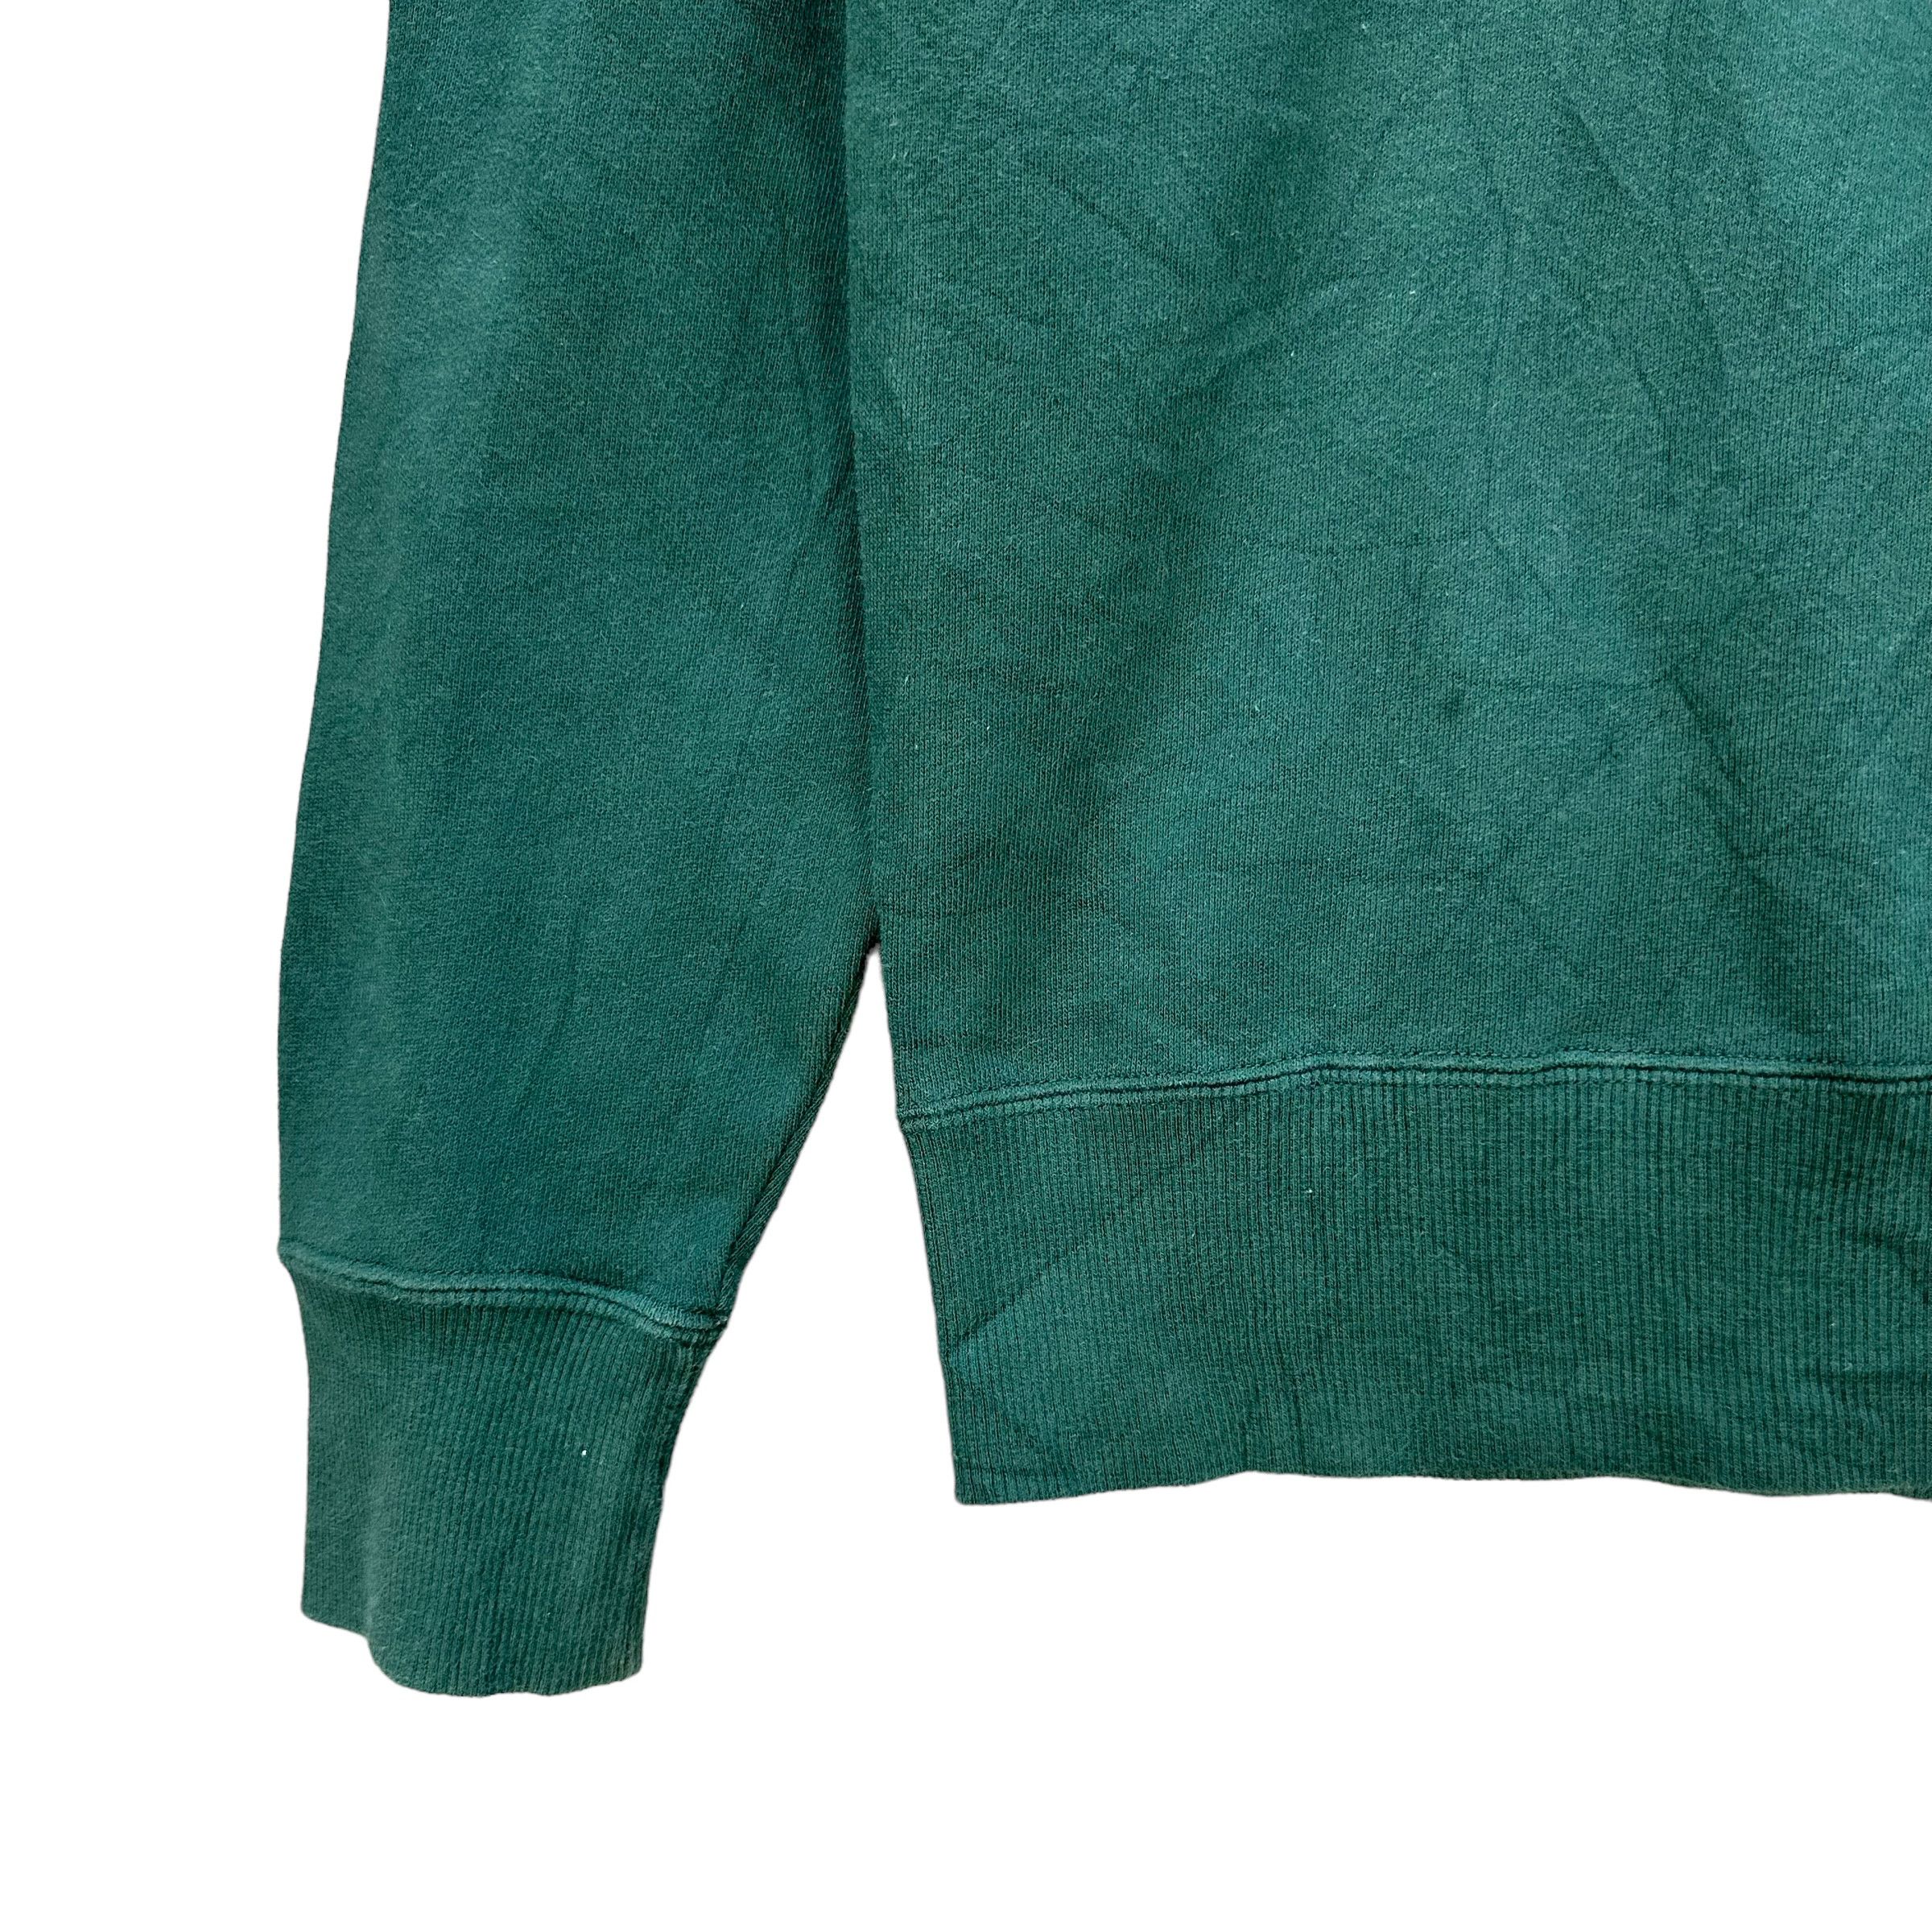 Champion Green Sweatshirts #9125-59 - 4